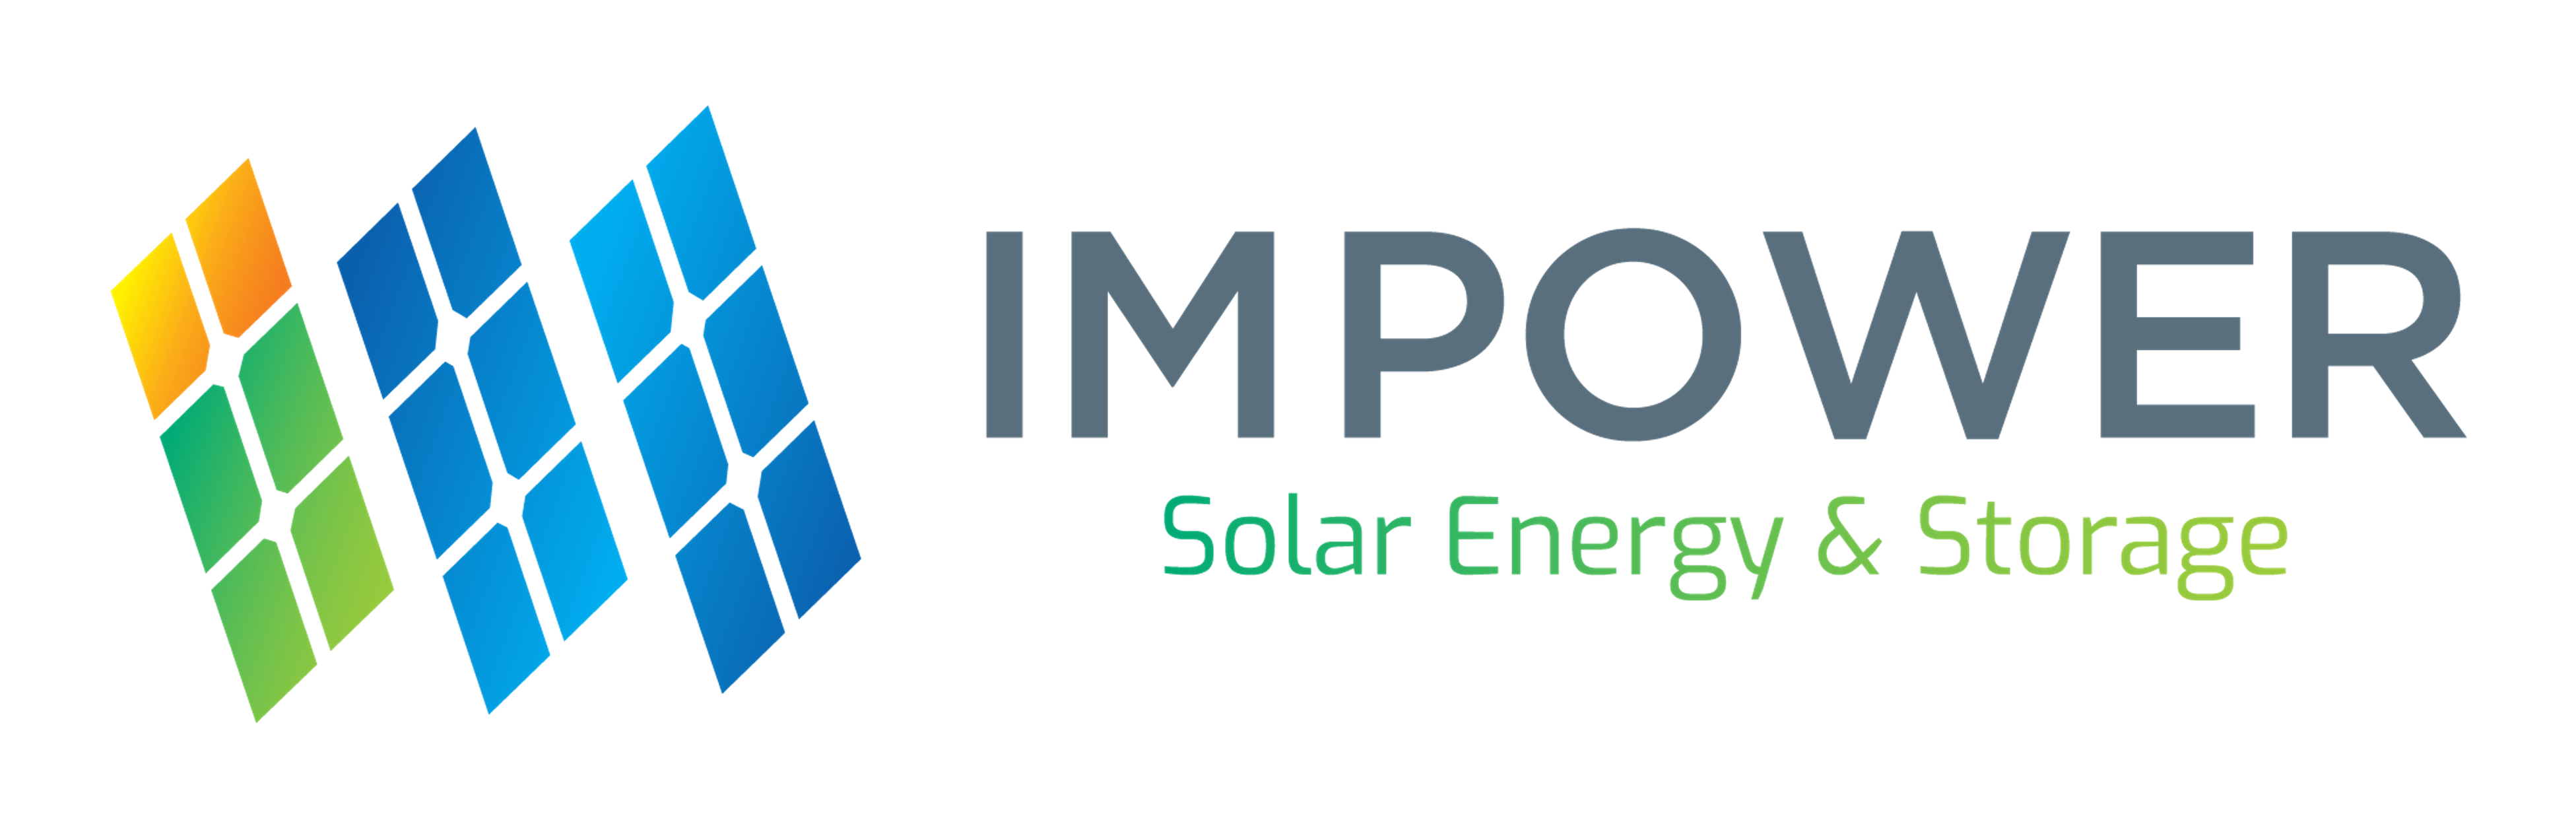 IMPOWER solar energy & Storage logo